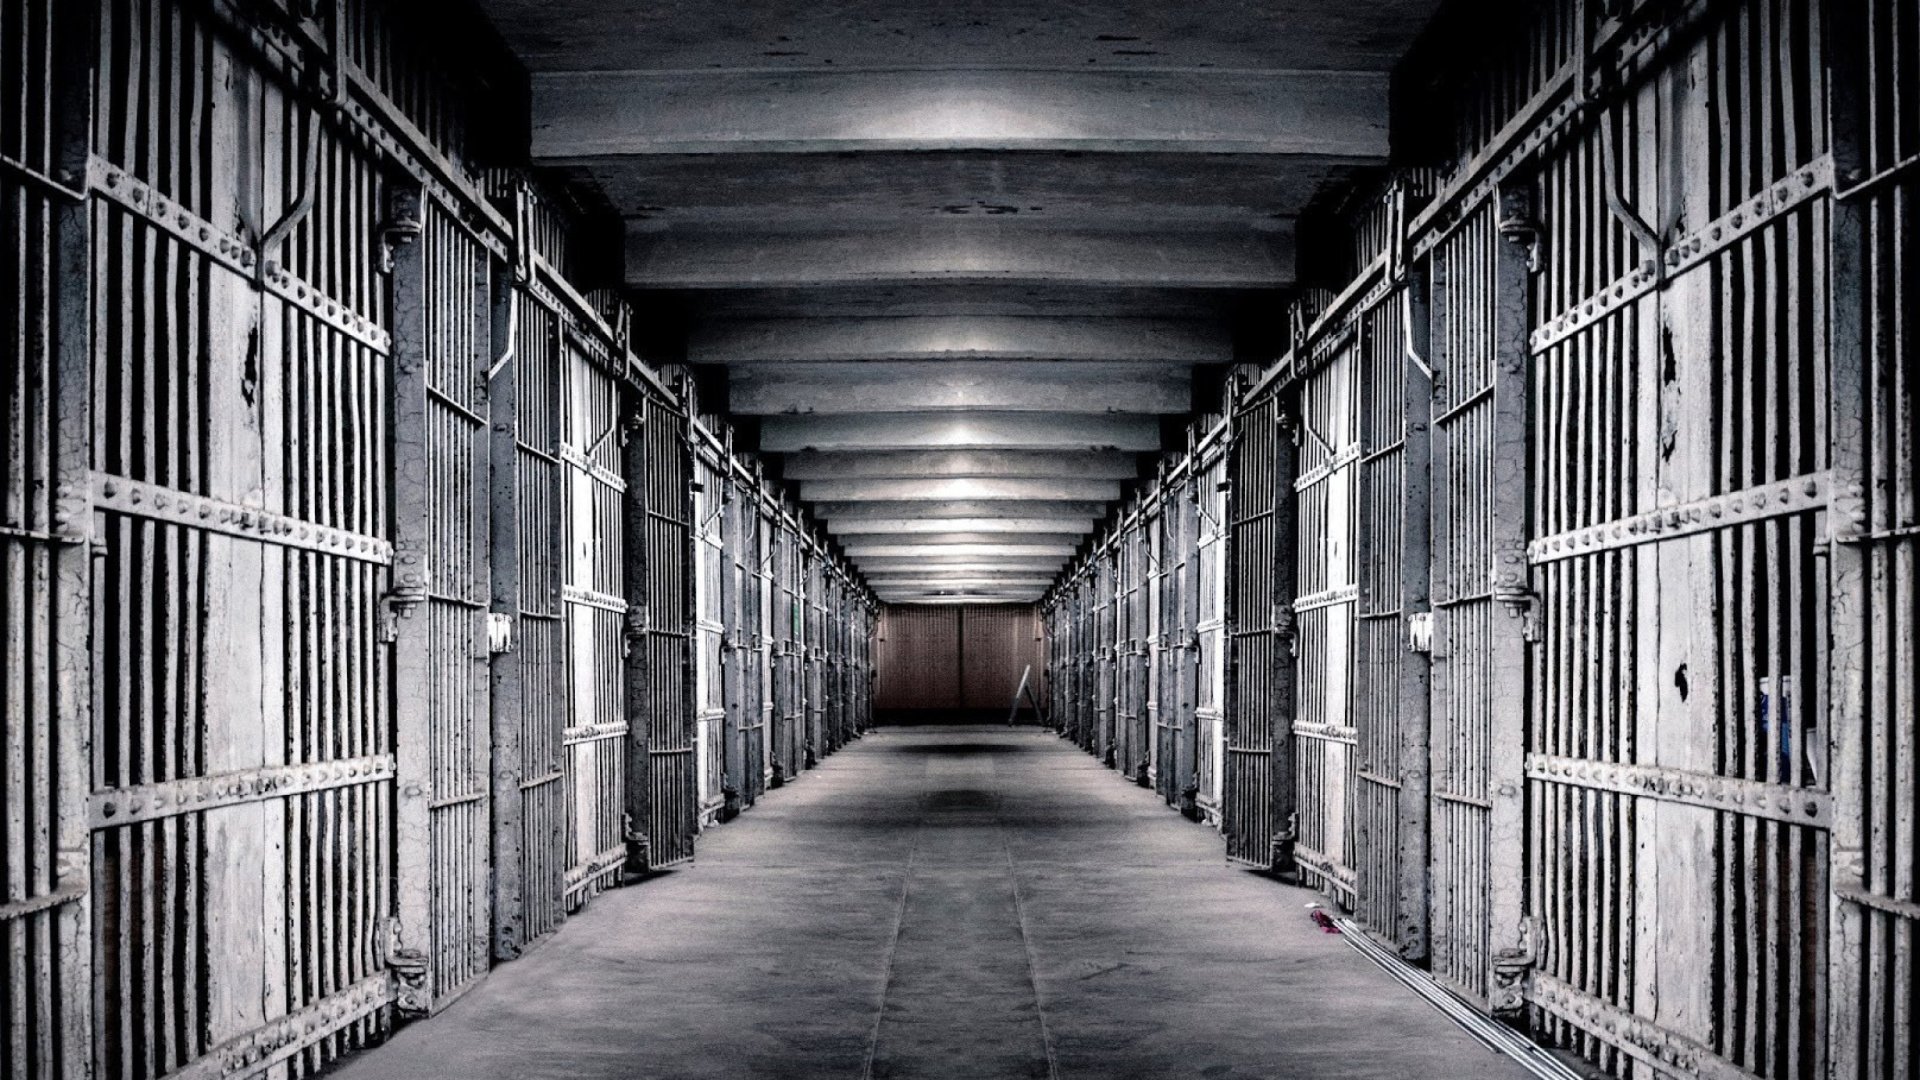 Jails And Prisons Wallpaper Pixshark Image